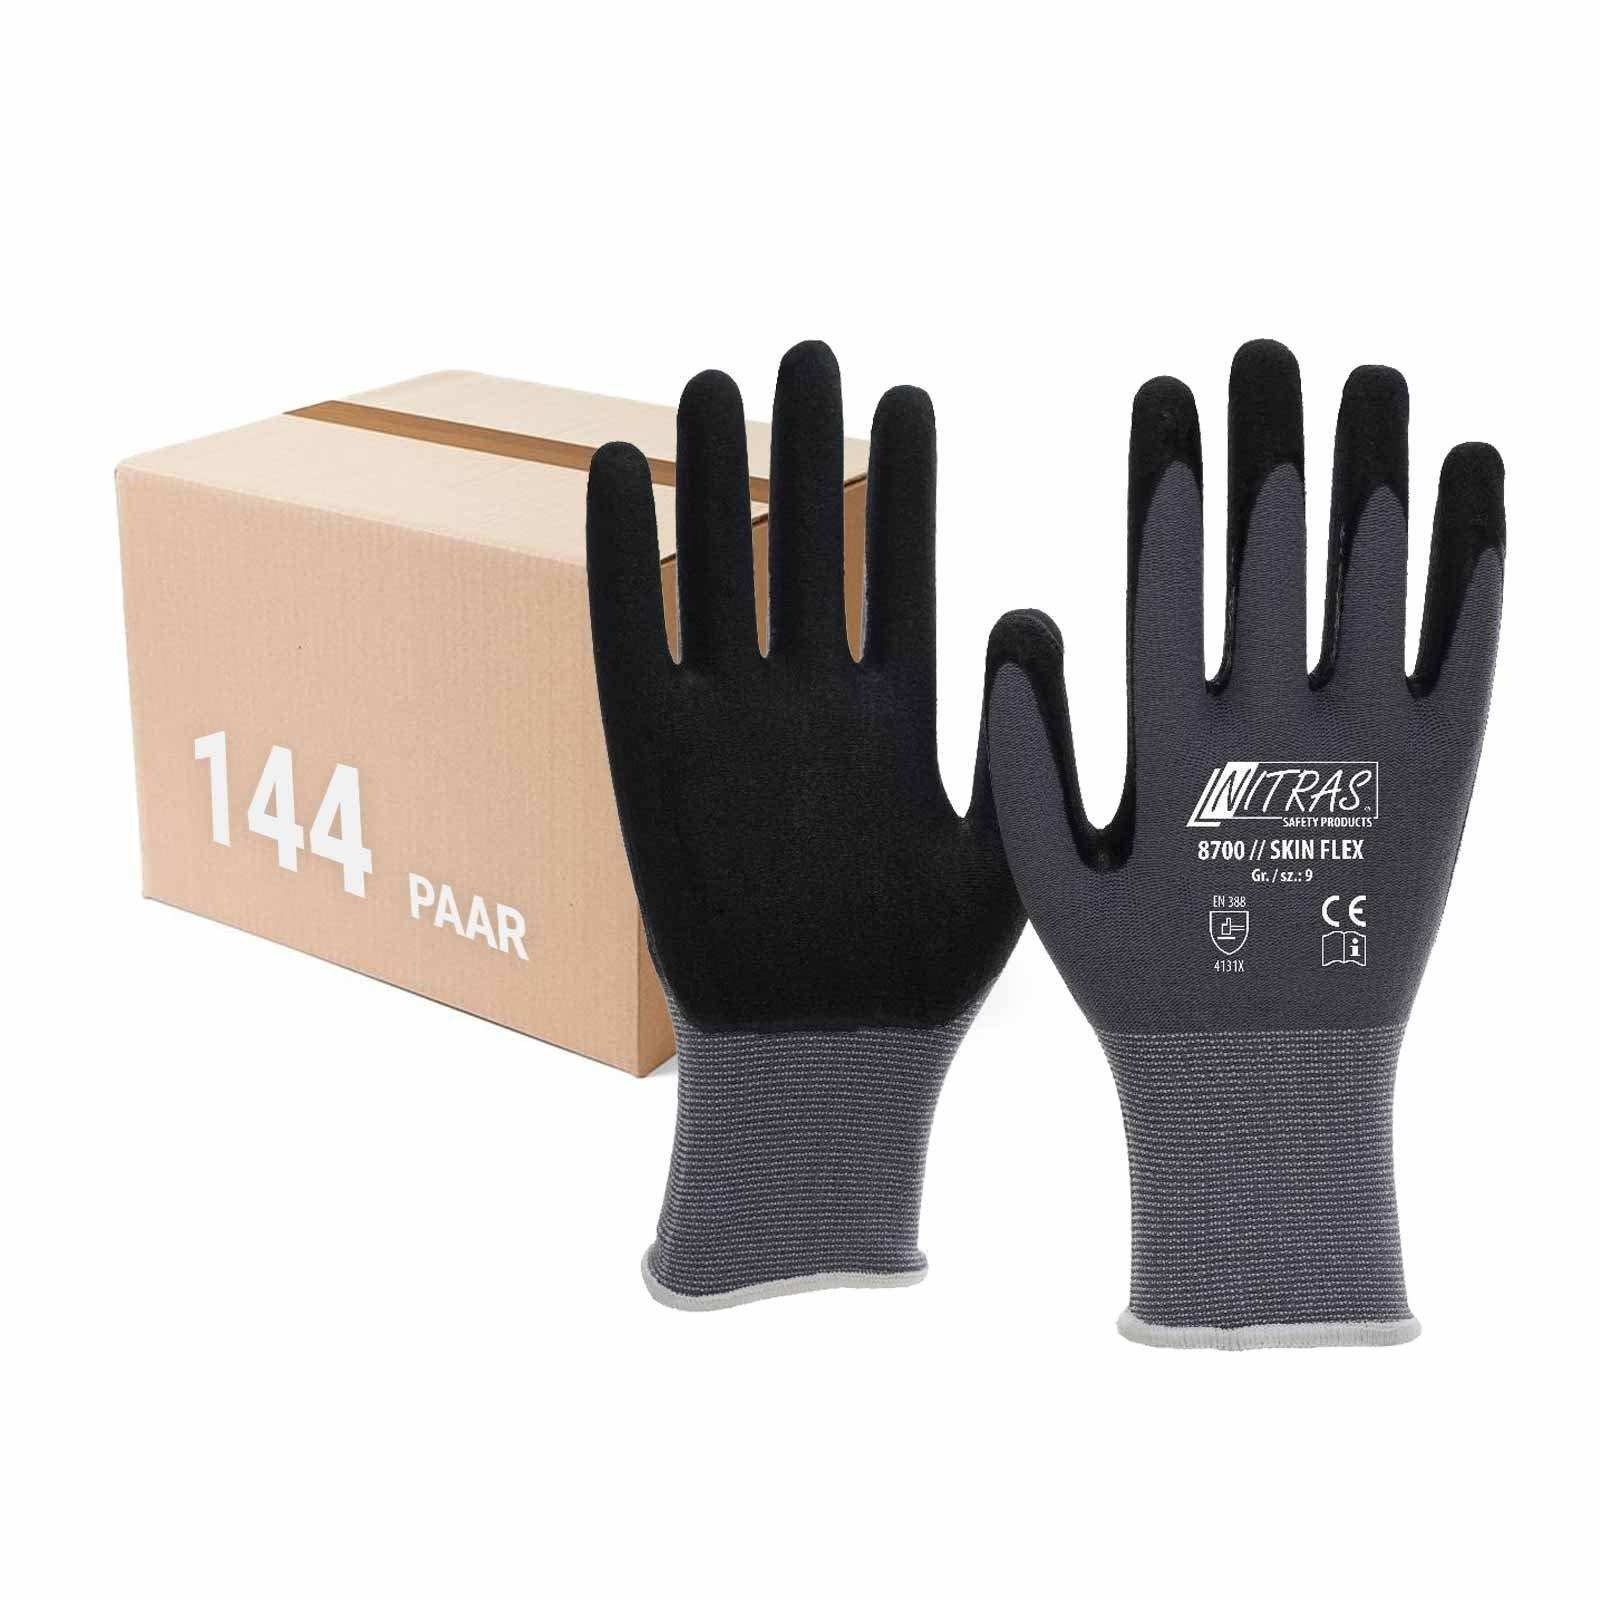 Nitras Nitril-Handschuhe NITRAS Skin-Flex Strickhandschuhe 8700 gestrickte Handschuhe -144 Paar (Spar-Set)